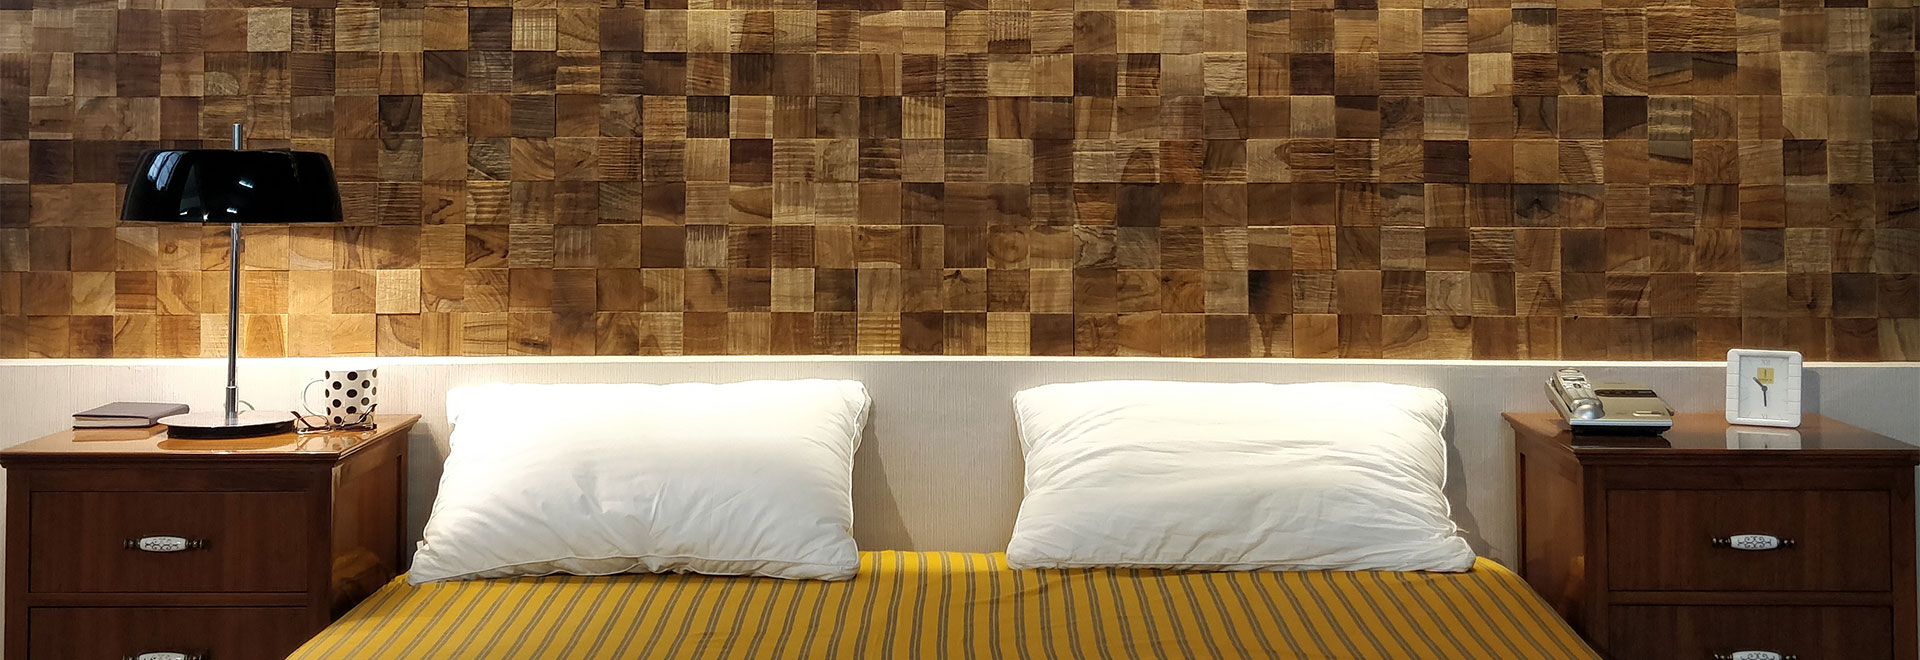 Real Wood Wall Paneling